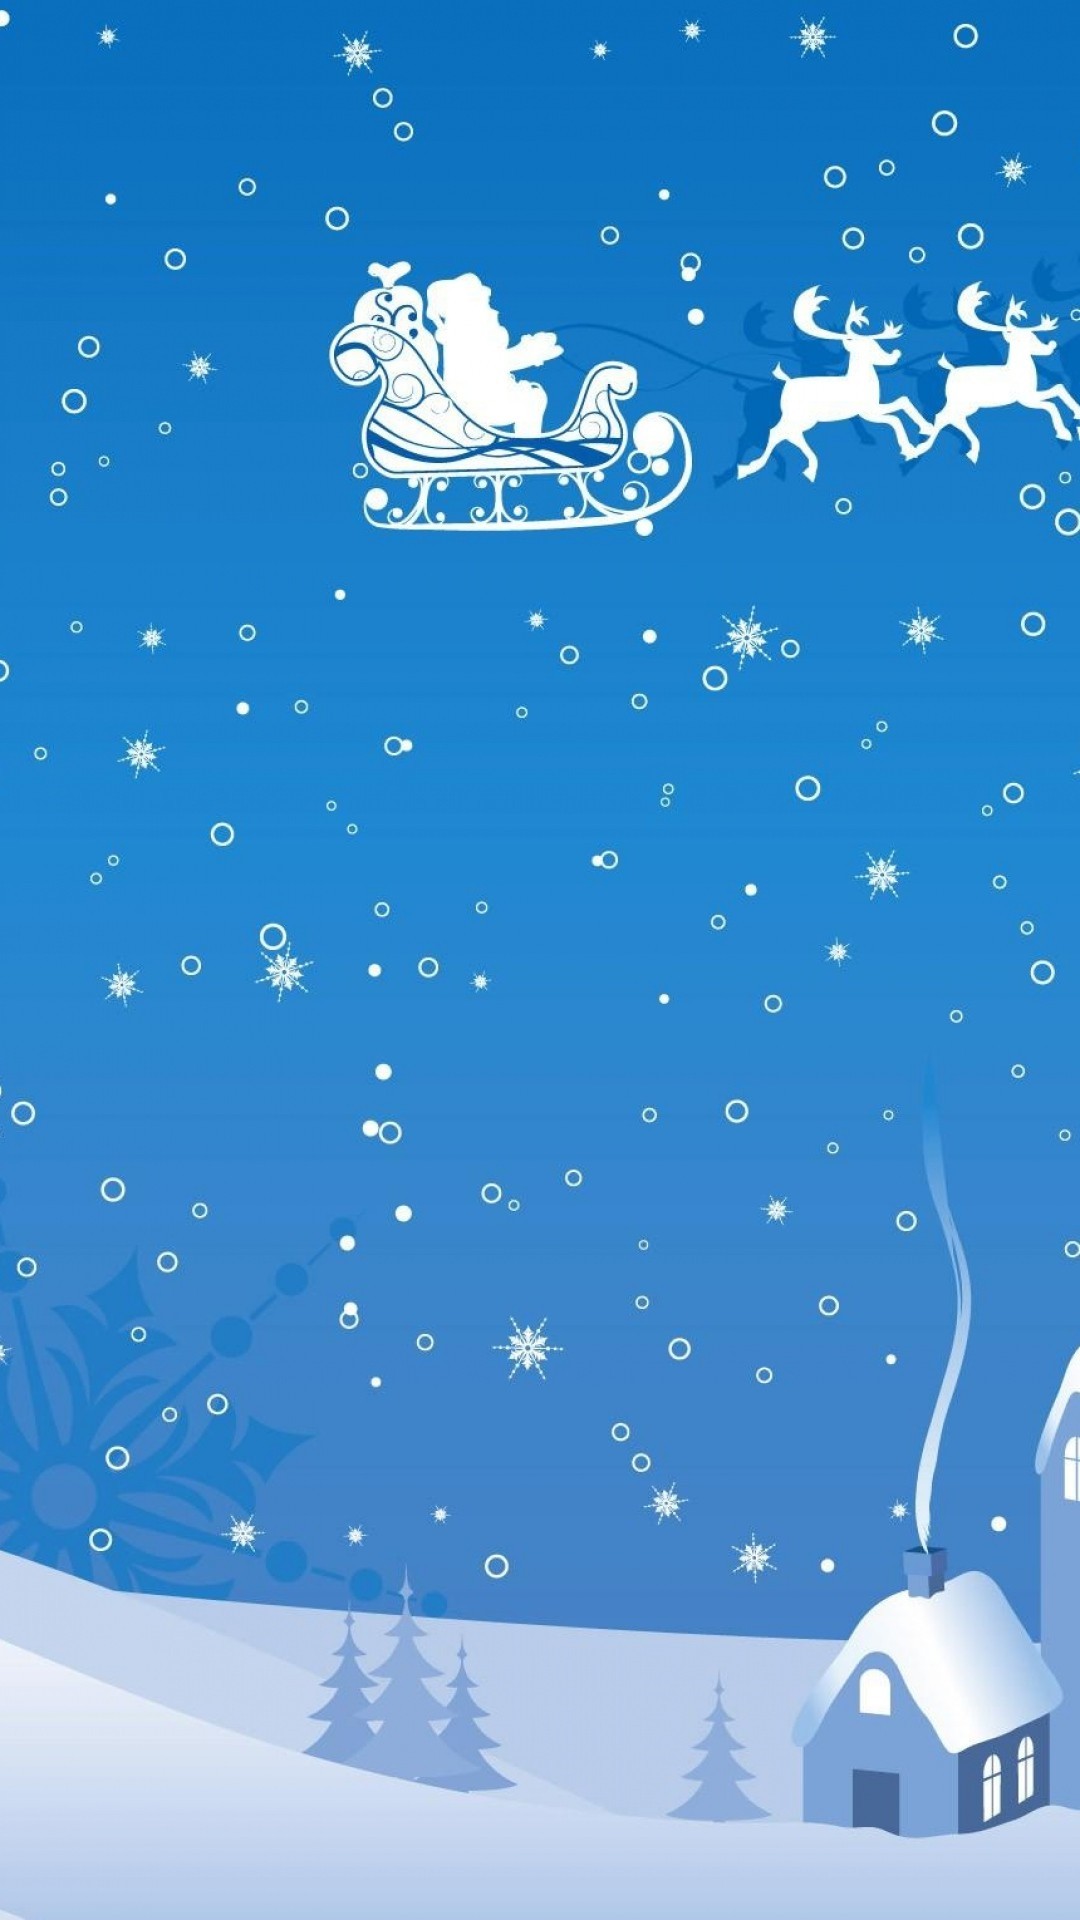 1080x1920 blue and white Christmas santa iPhone 6 plus wallpaper - reindeer